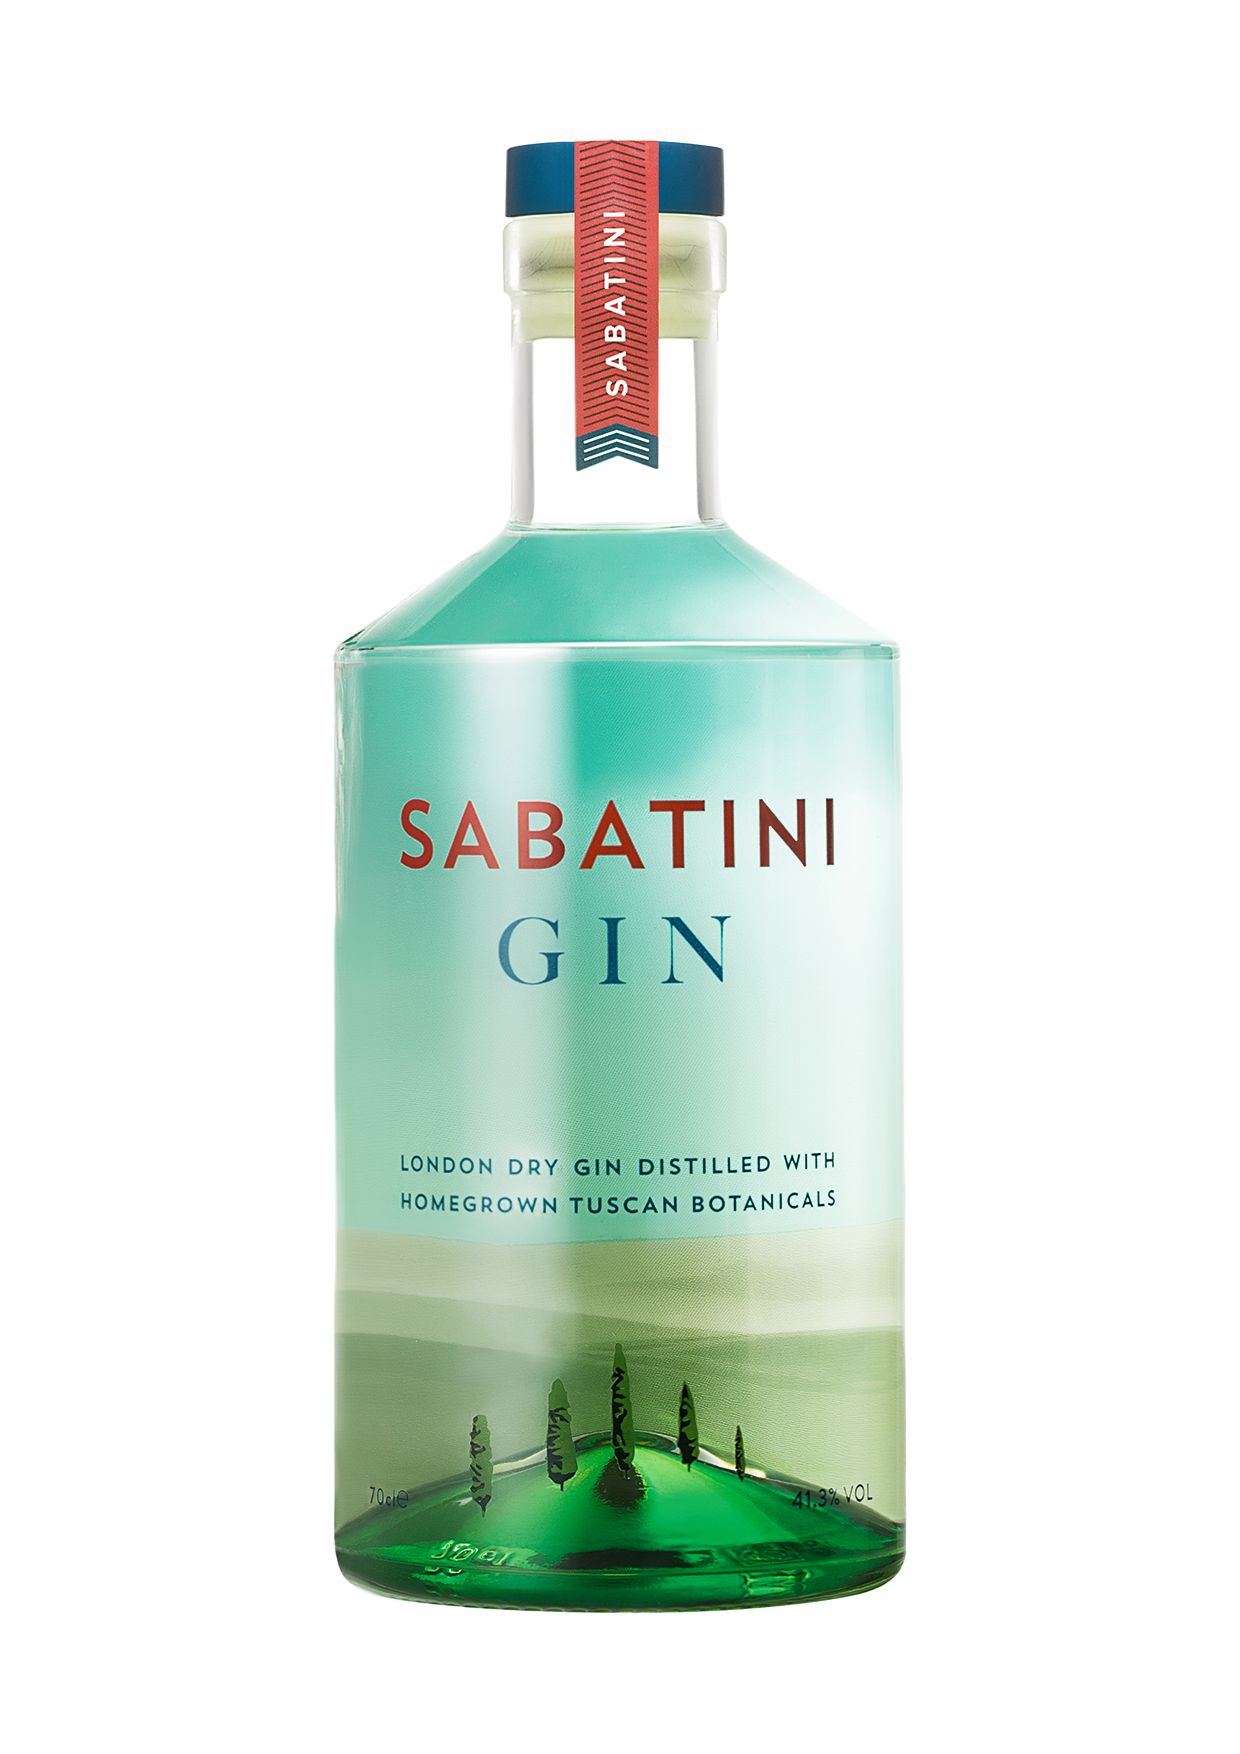 Sabatini London Dry Gin